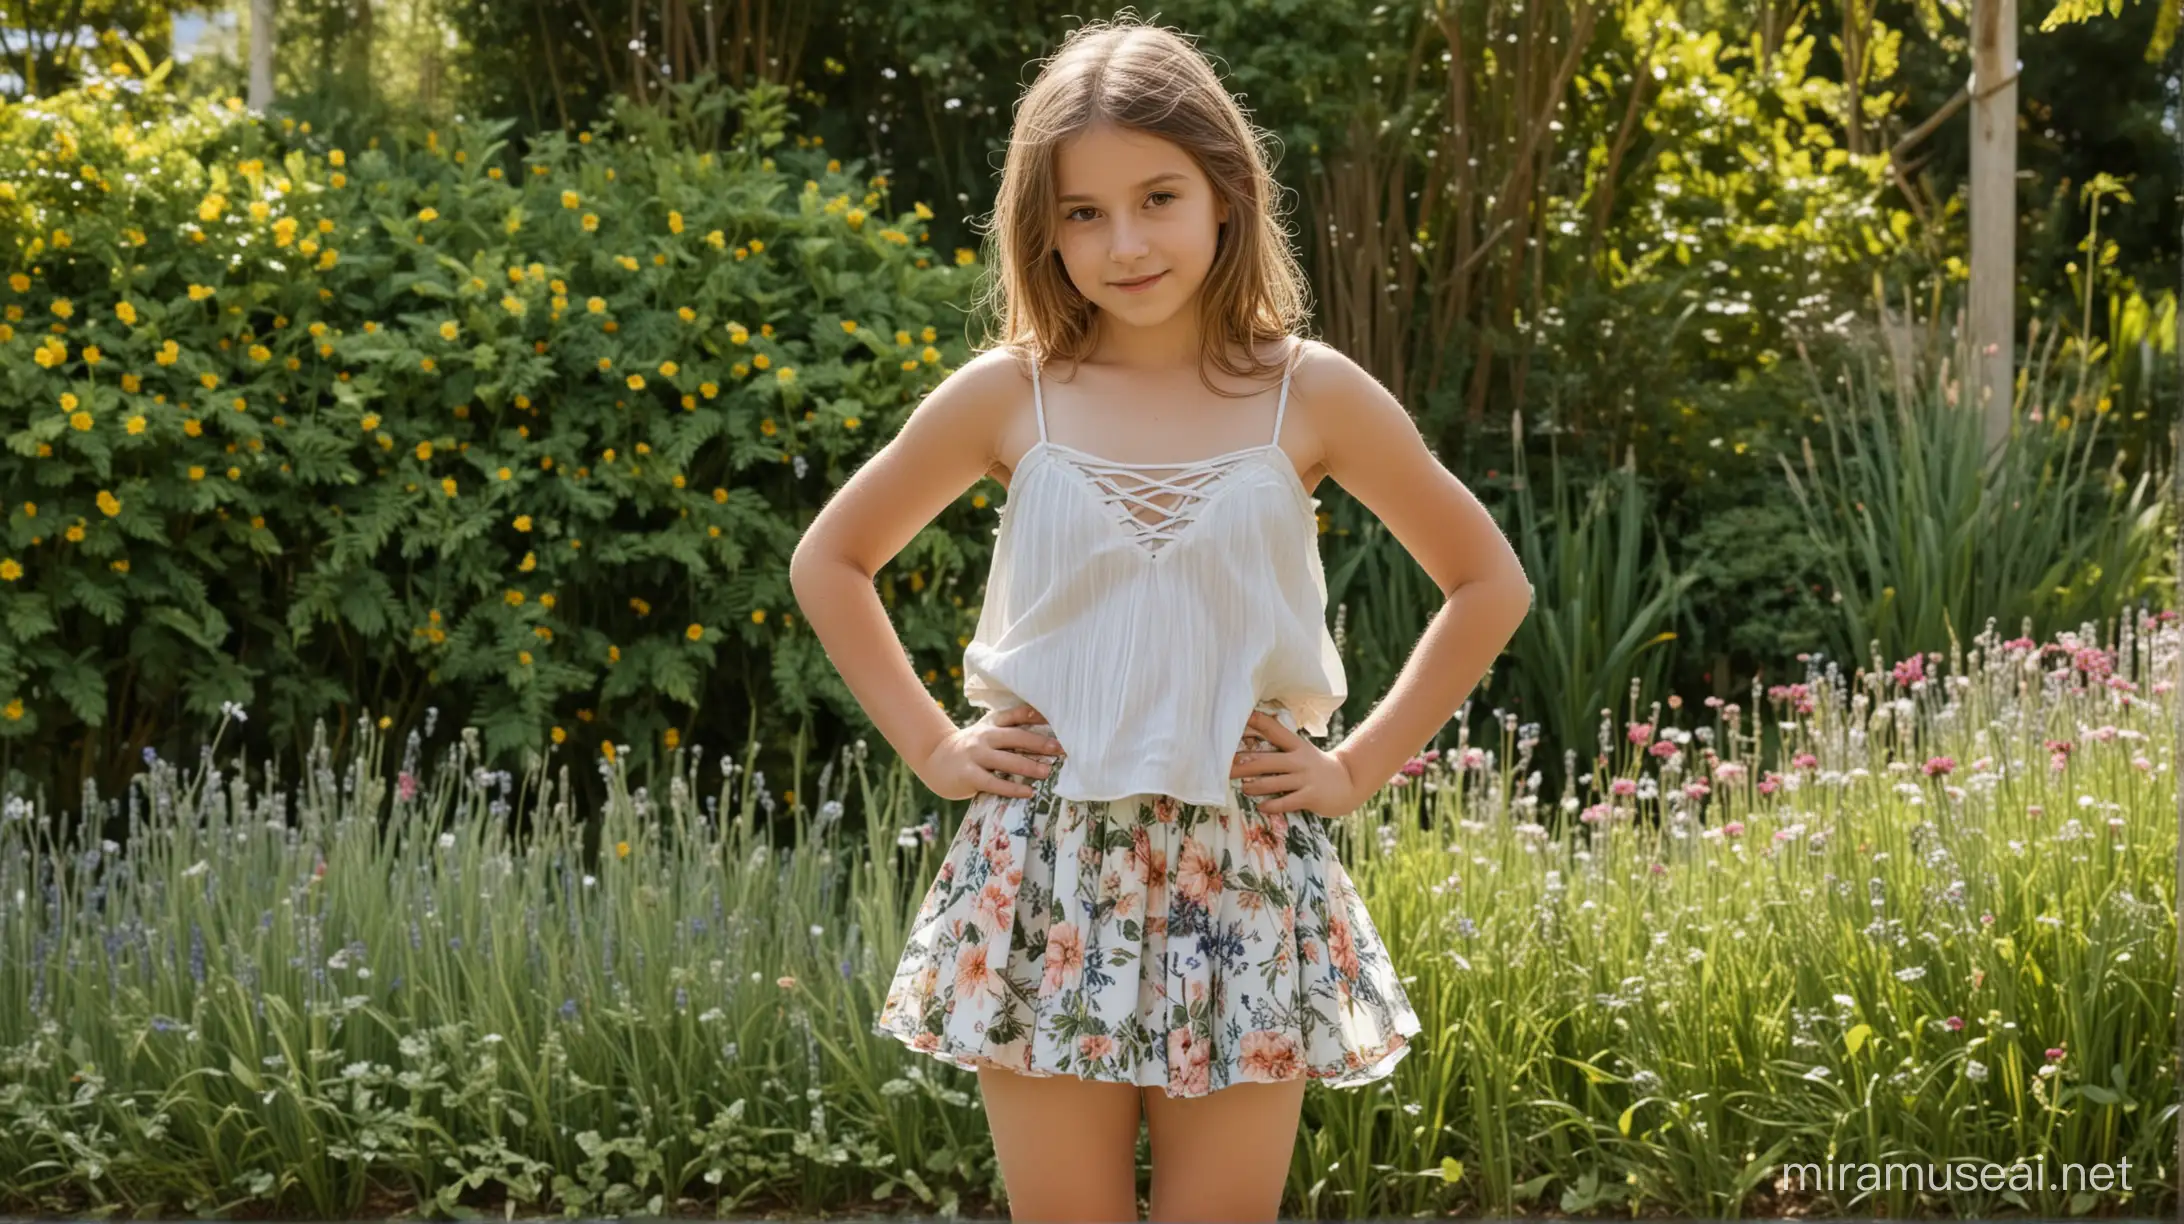 Young Girl in Flowy Mini Skirt Enjoying Garden Serenity